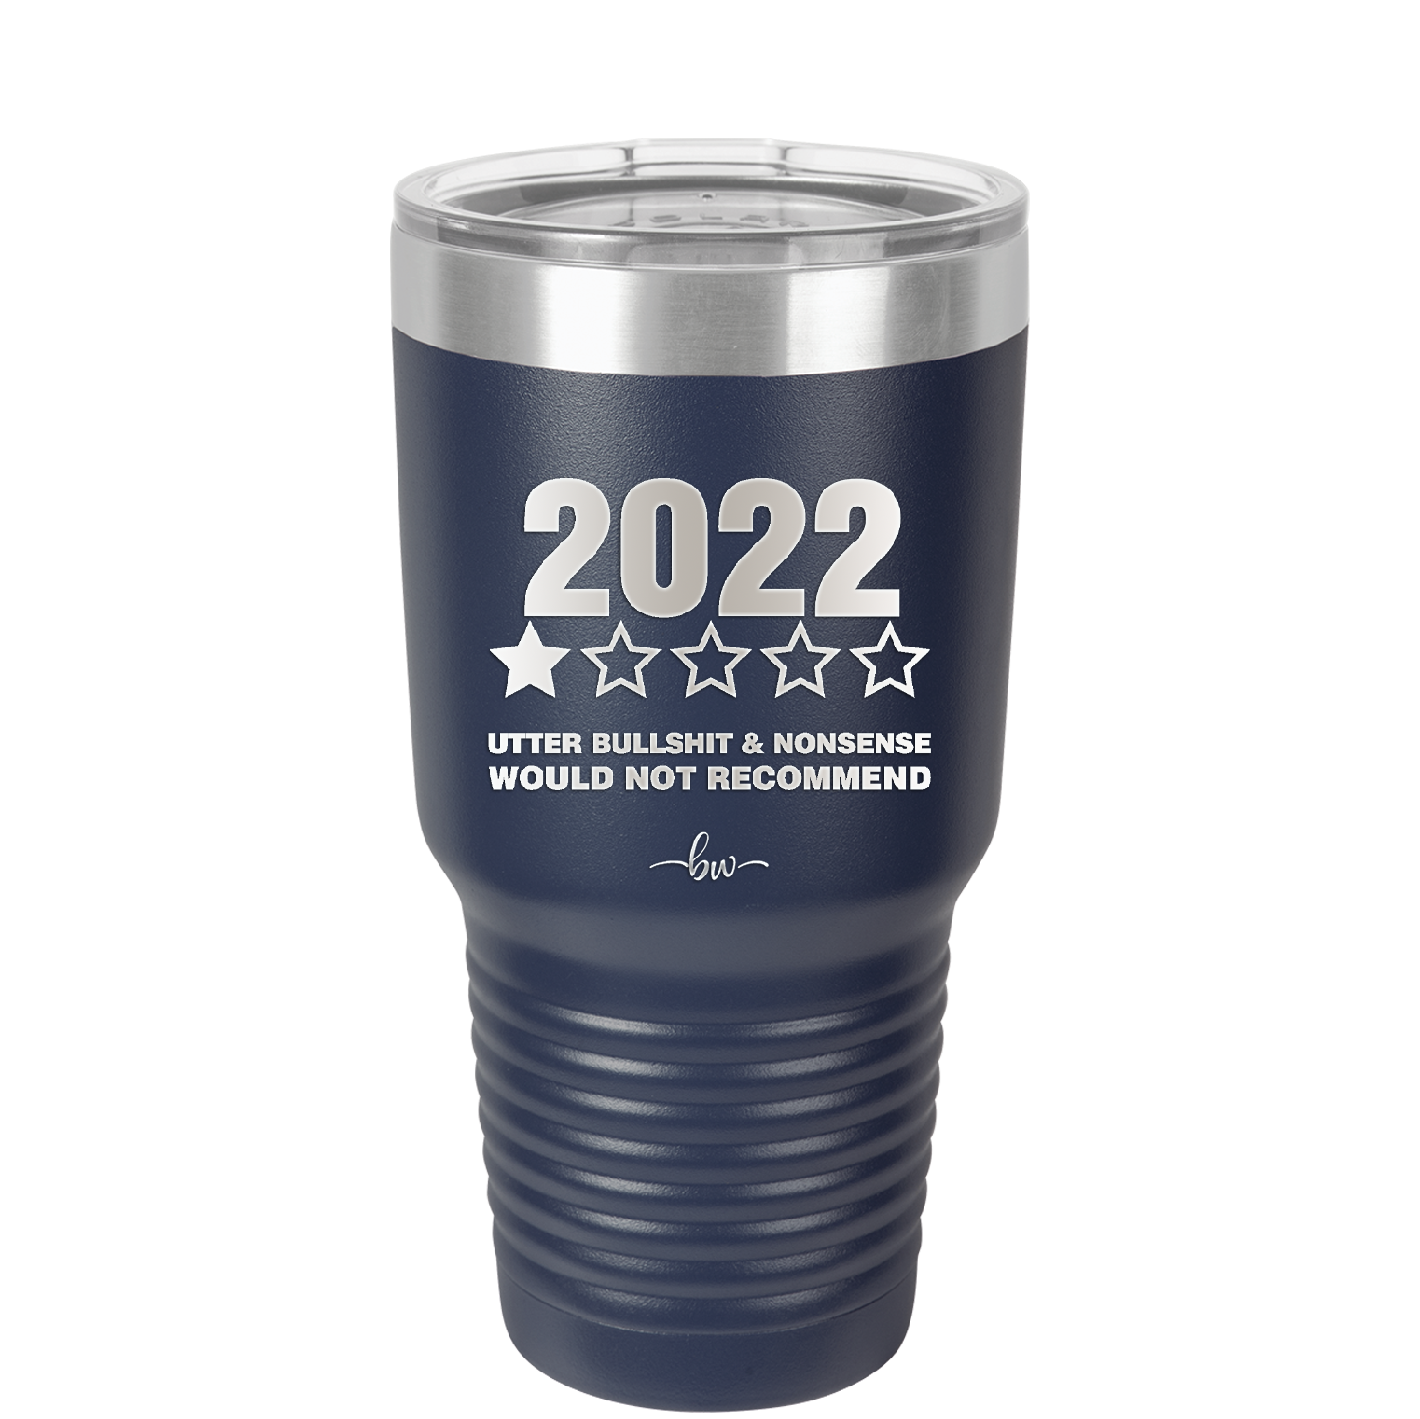 30 oz 2022 utter bullshitt and nonsense would not recommend- navy